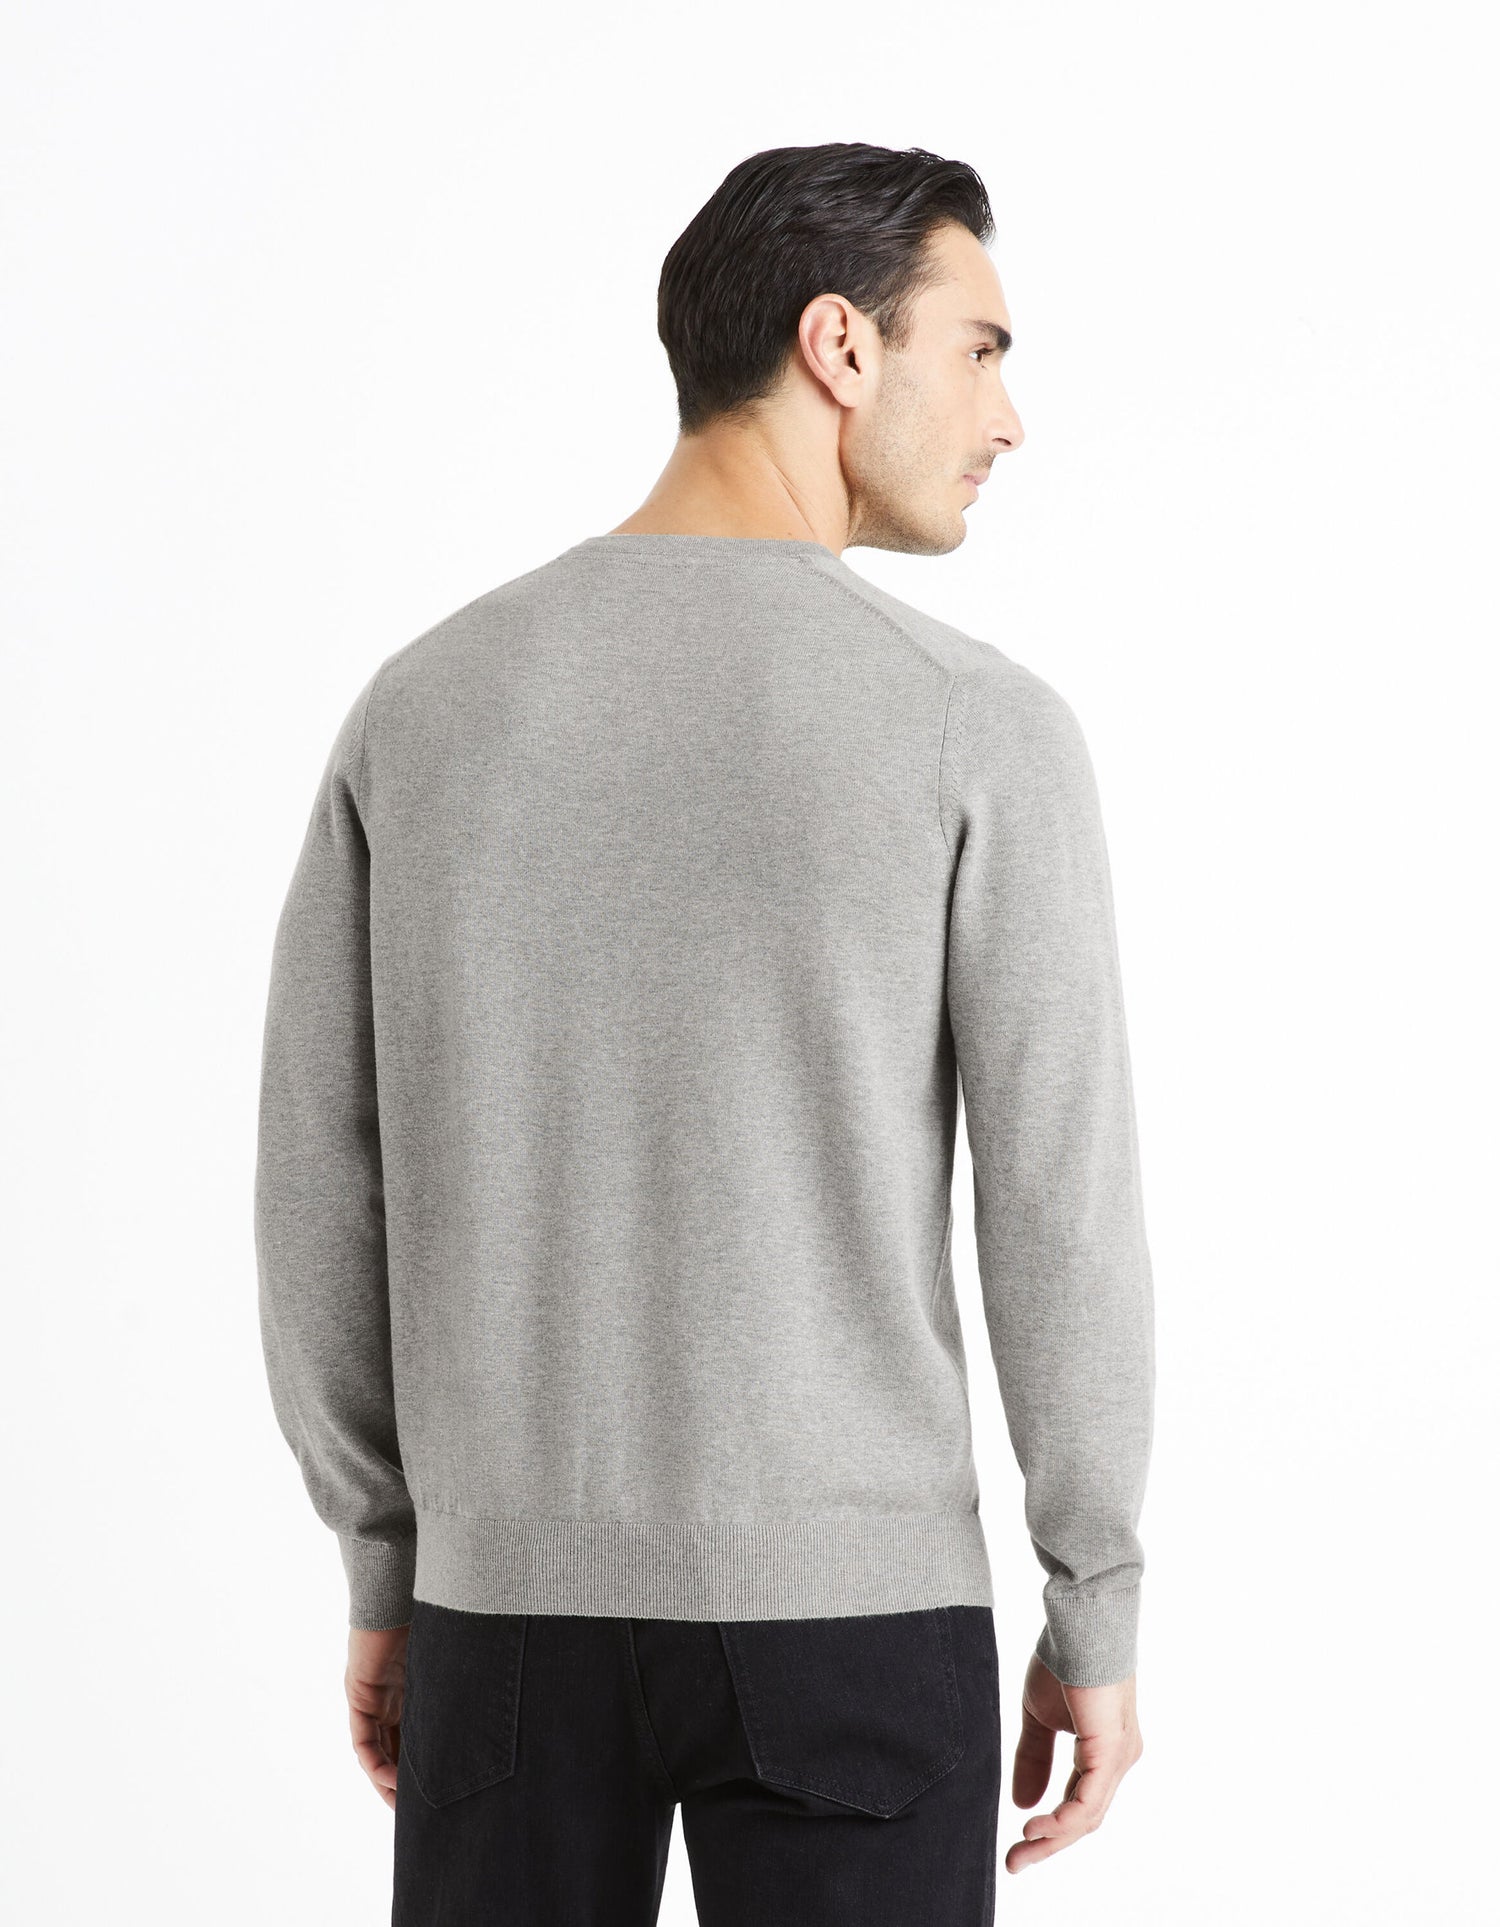 V-Neck Sweater 100% Cotton - Heather Grey_DECOTONV_GREY MEL_04